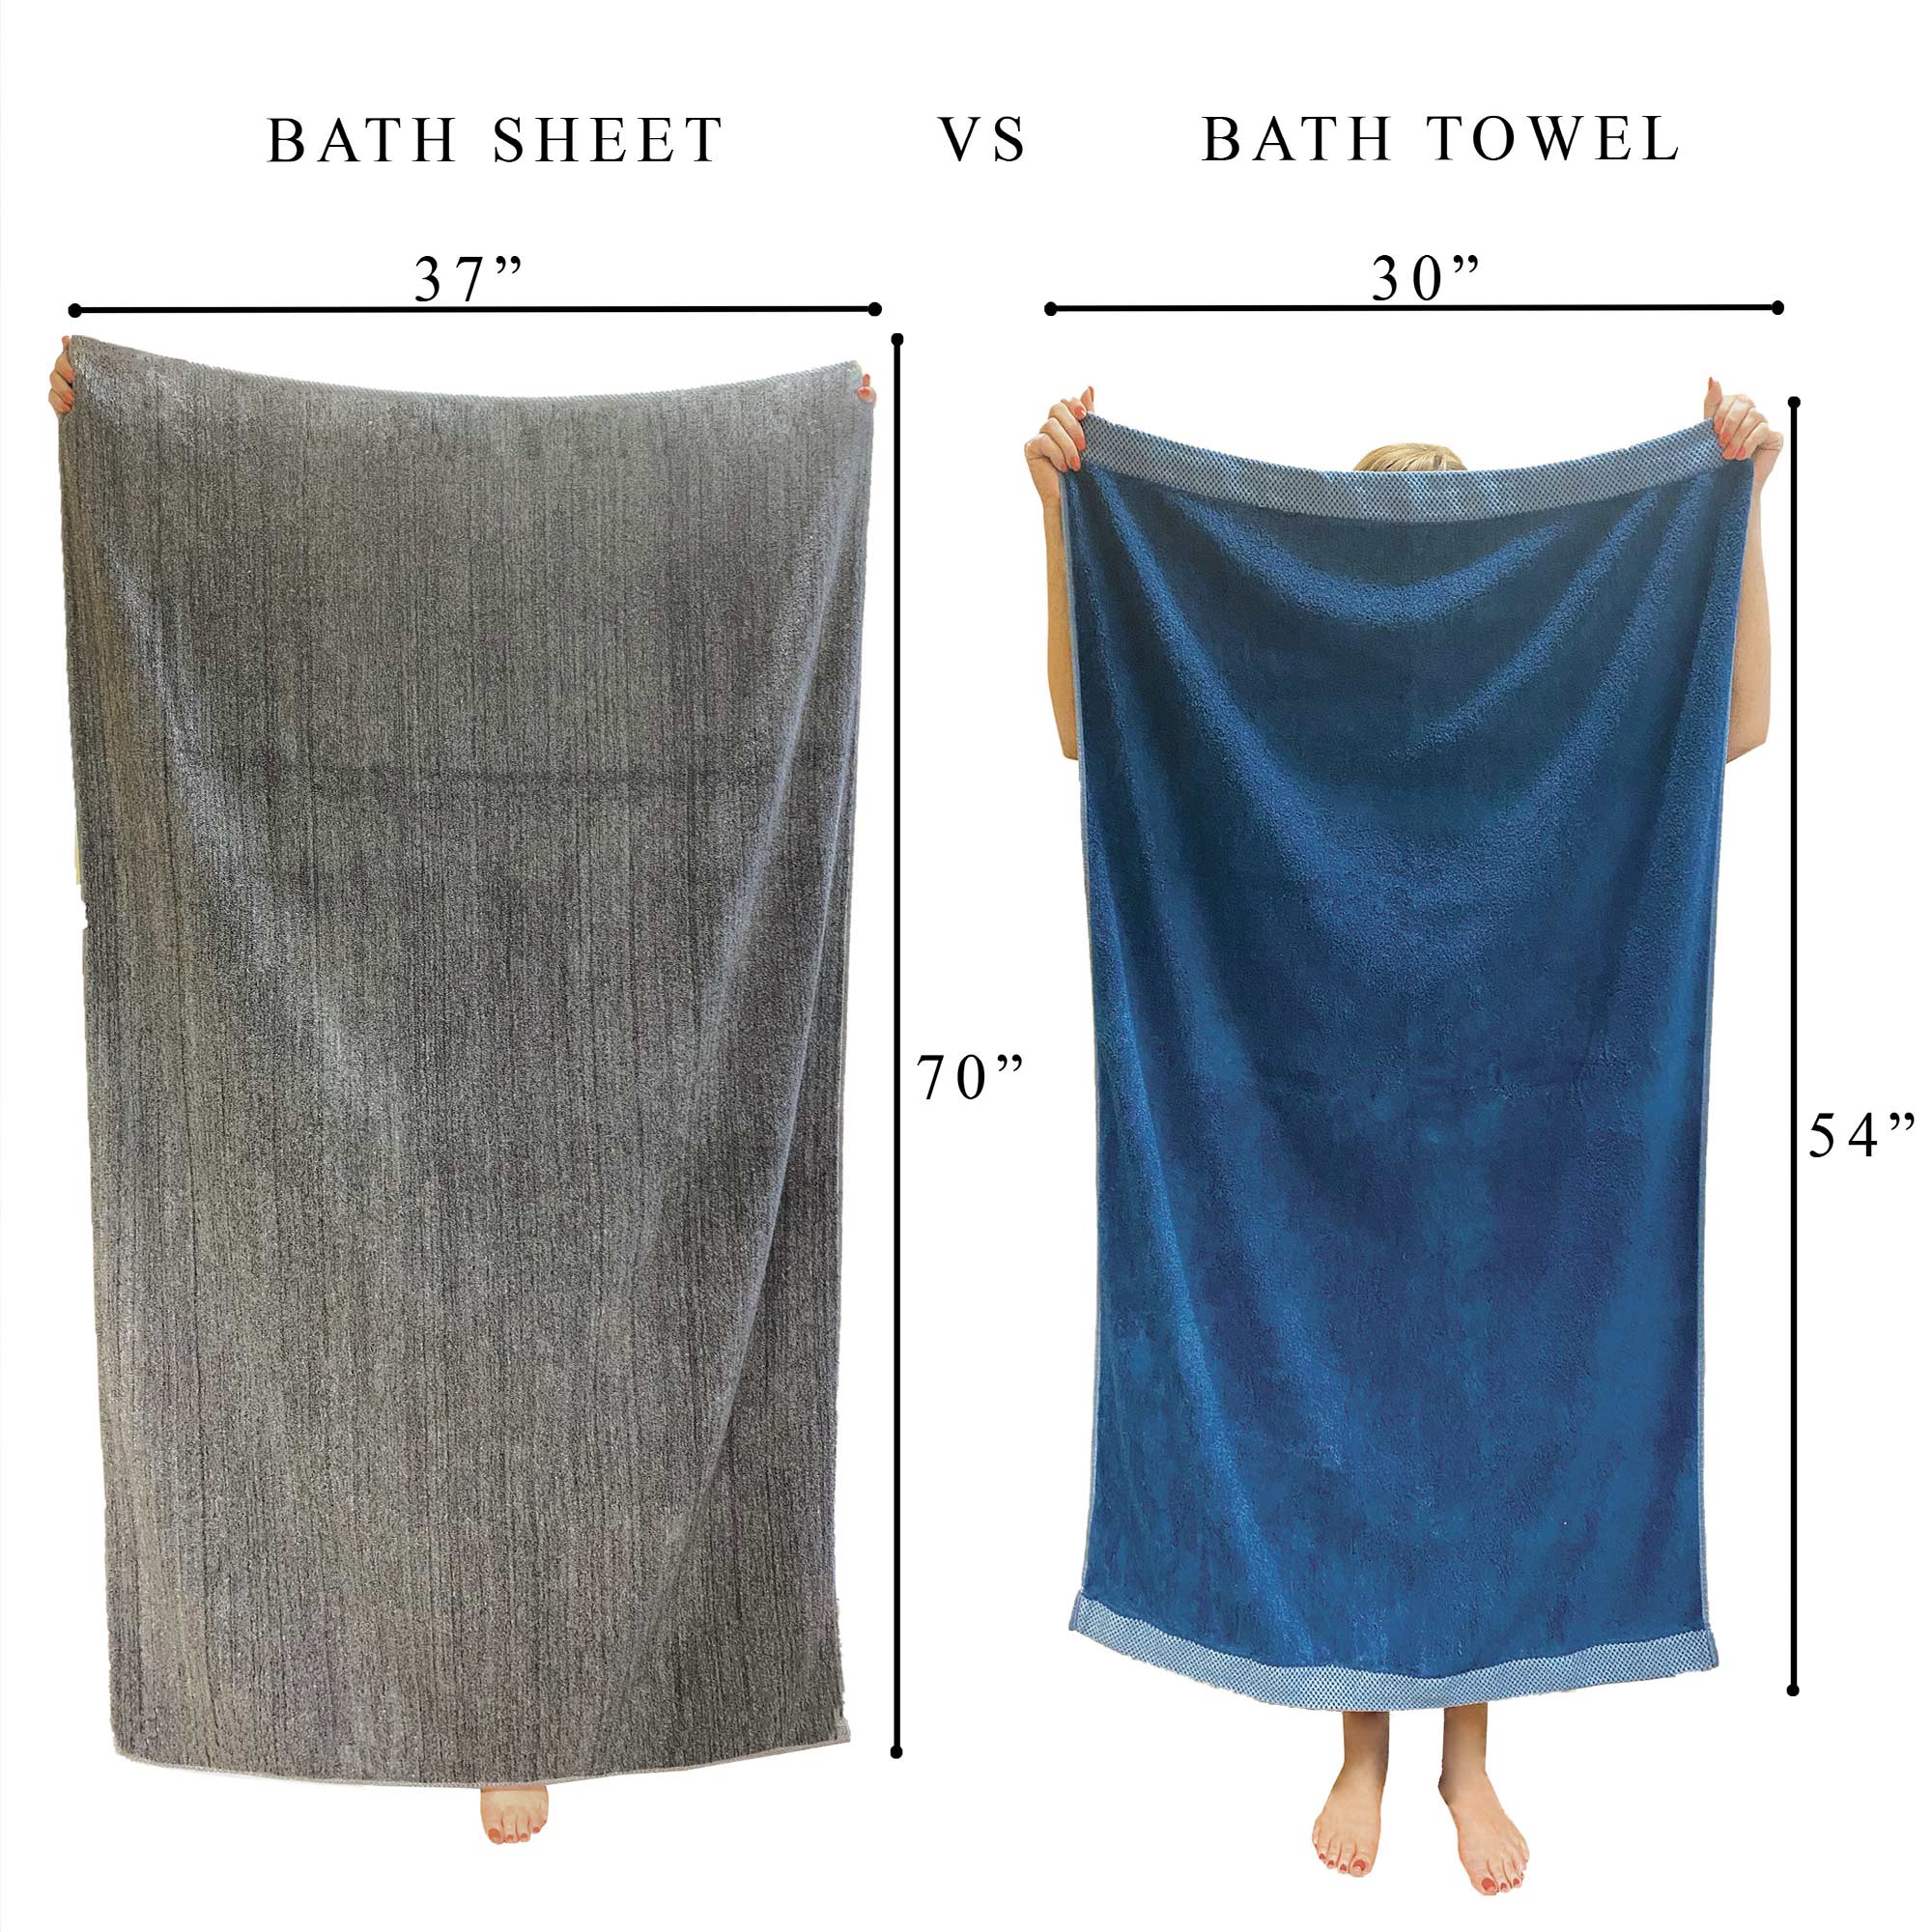 MELANGE Bamboo Hand Towel 2Pack - Feel Fresh & Clean, Resistant to Bacteria - Hypoallergenic Bath Towel Sets - Sand